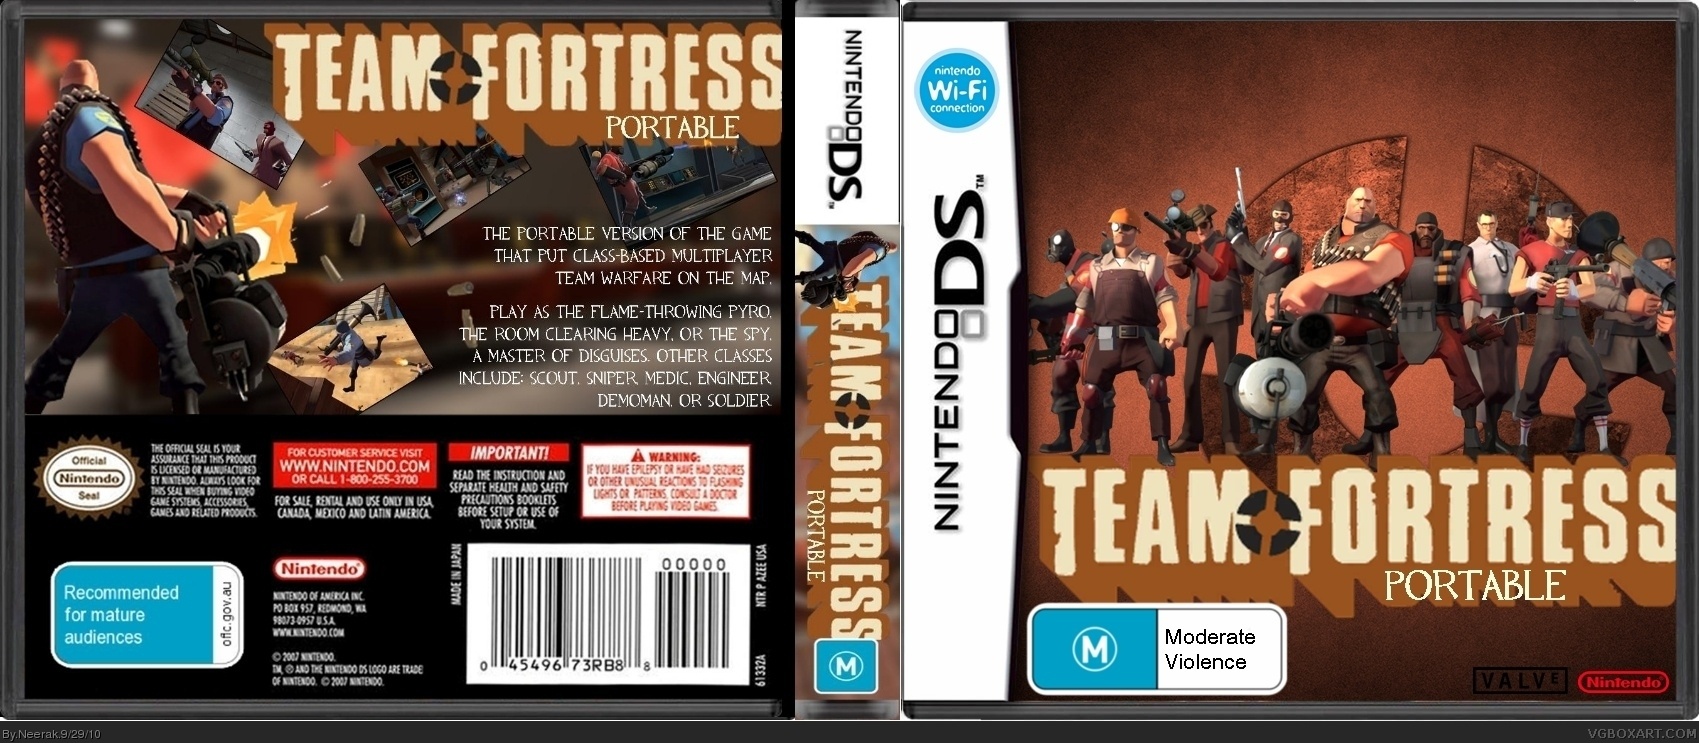 Team Fortress Portable box cover